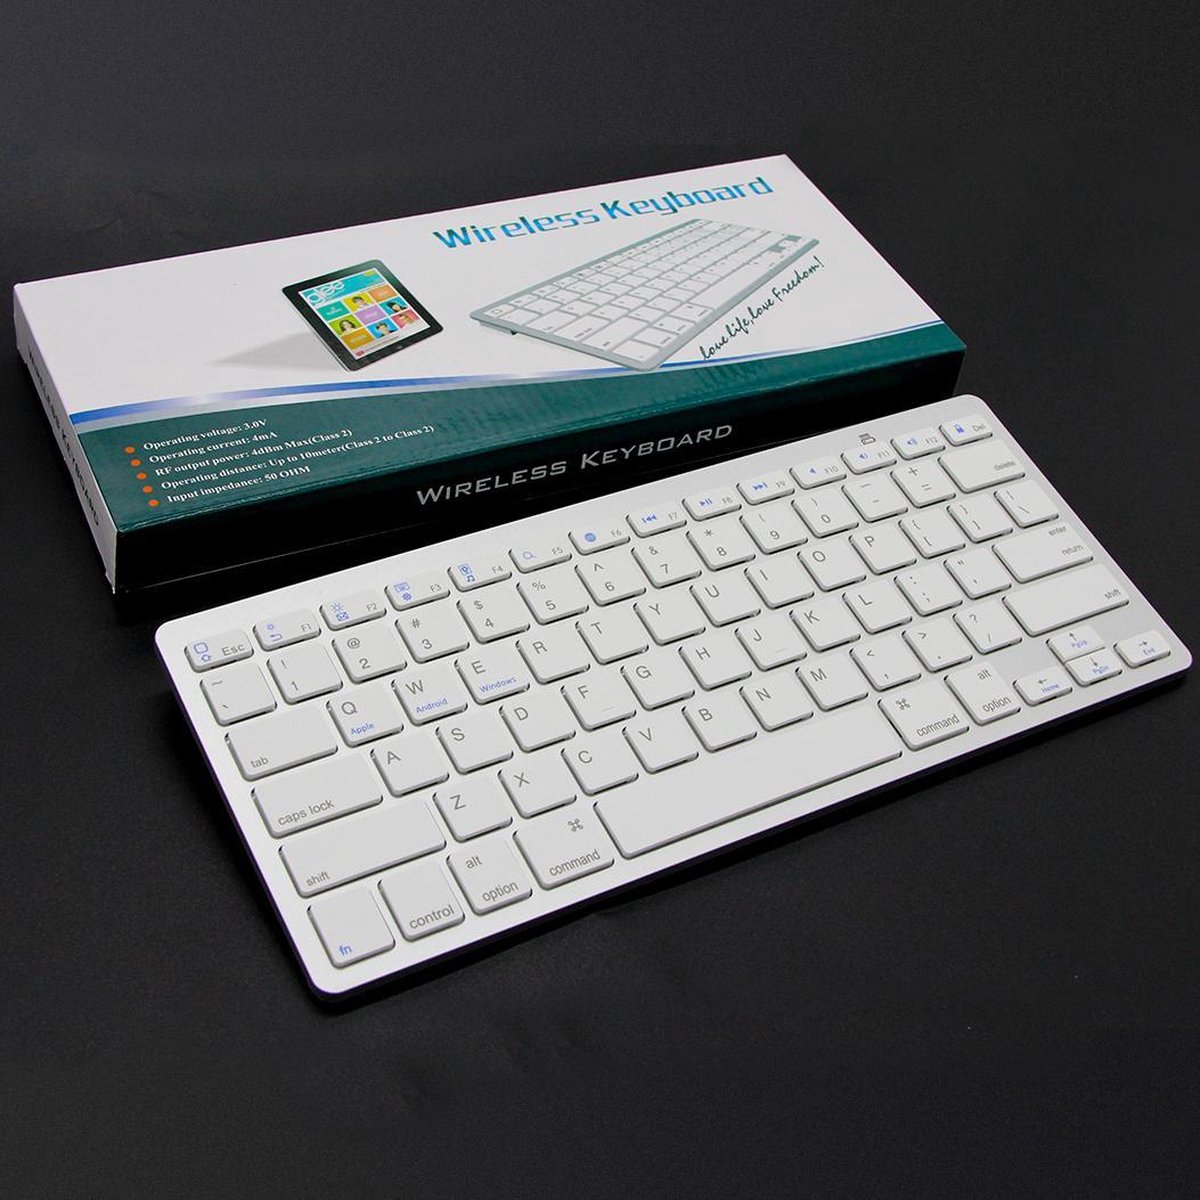 Wireless Keyboard - Draadloos Toetsenbord - geschikt voor iOS, Android en Windows -